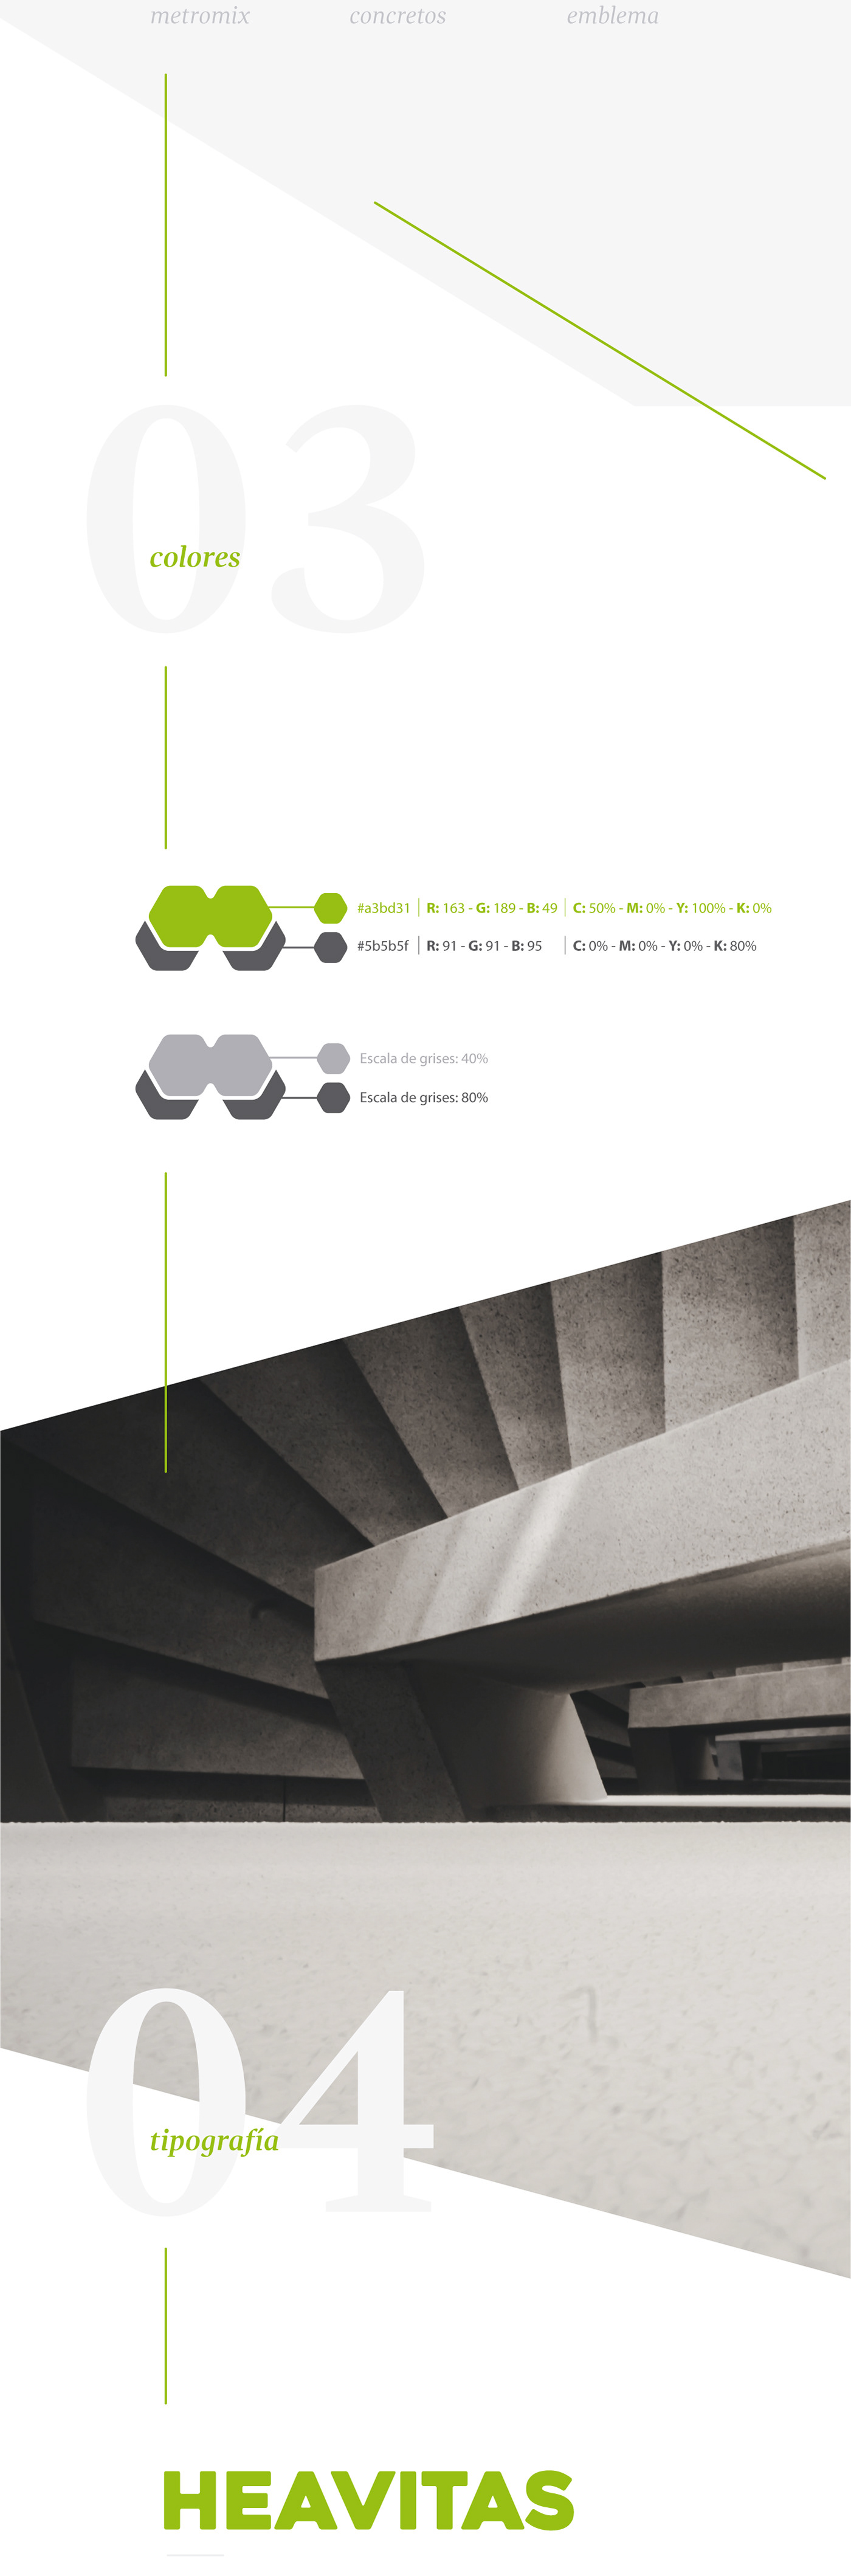 branding  metromix logo panama concrete CONCRETO concept marca